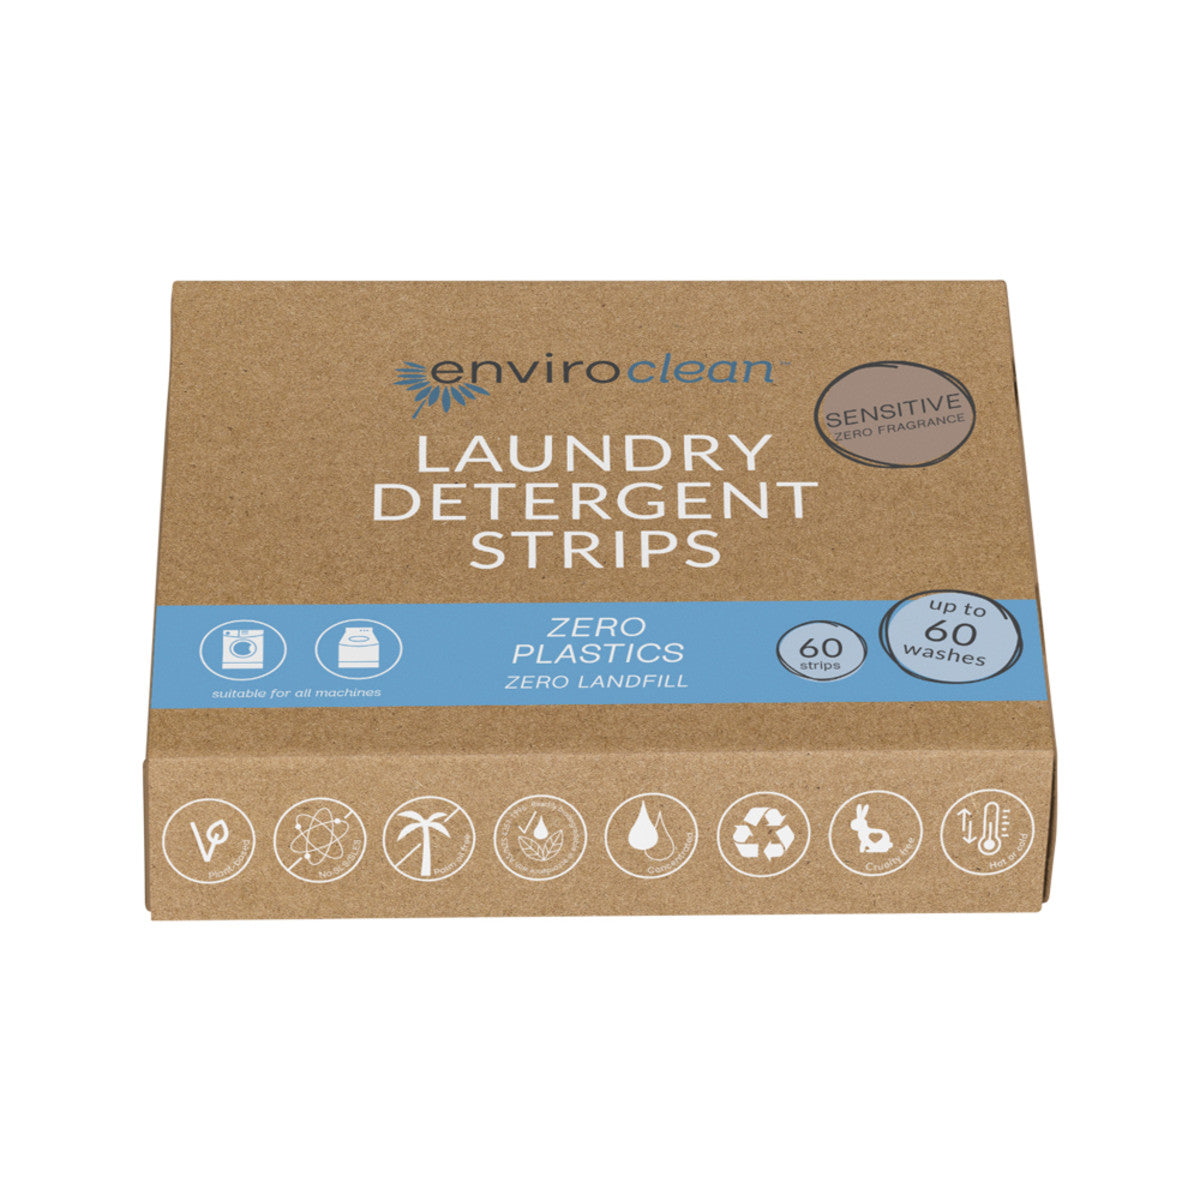 EnviroClean - Laundry Detergent Strips Sensitive x 60 Pack